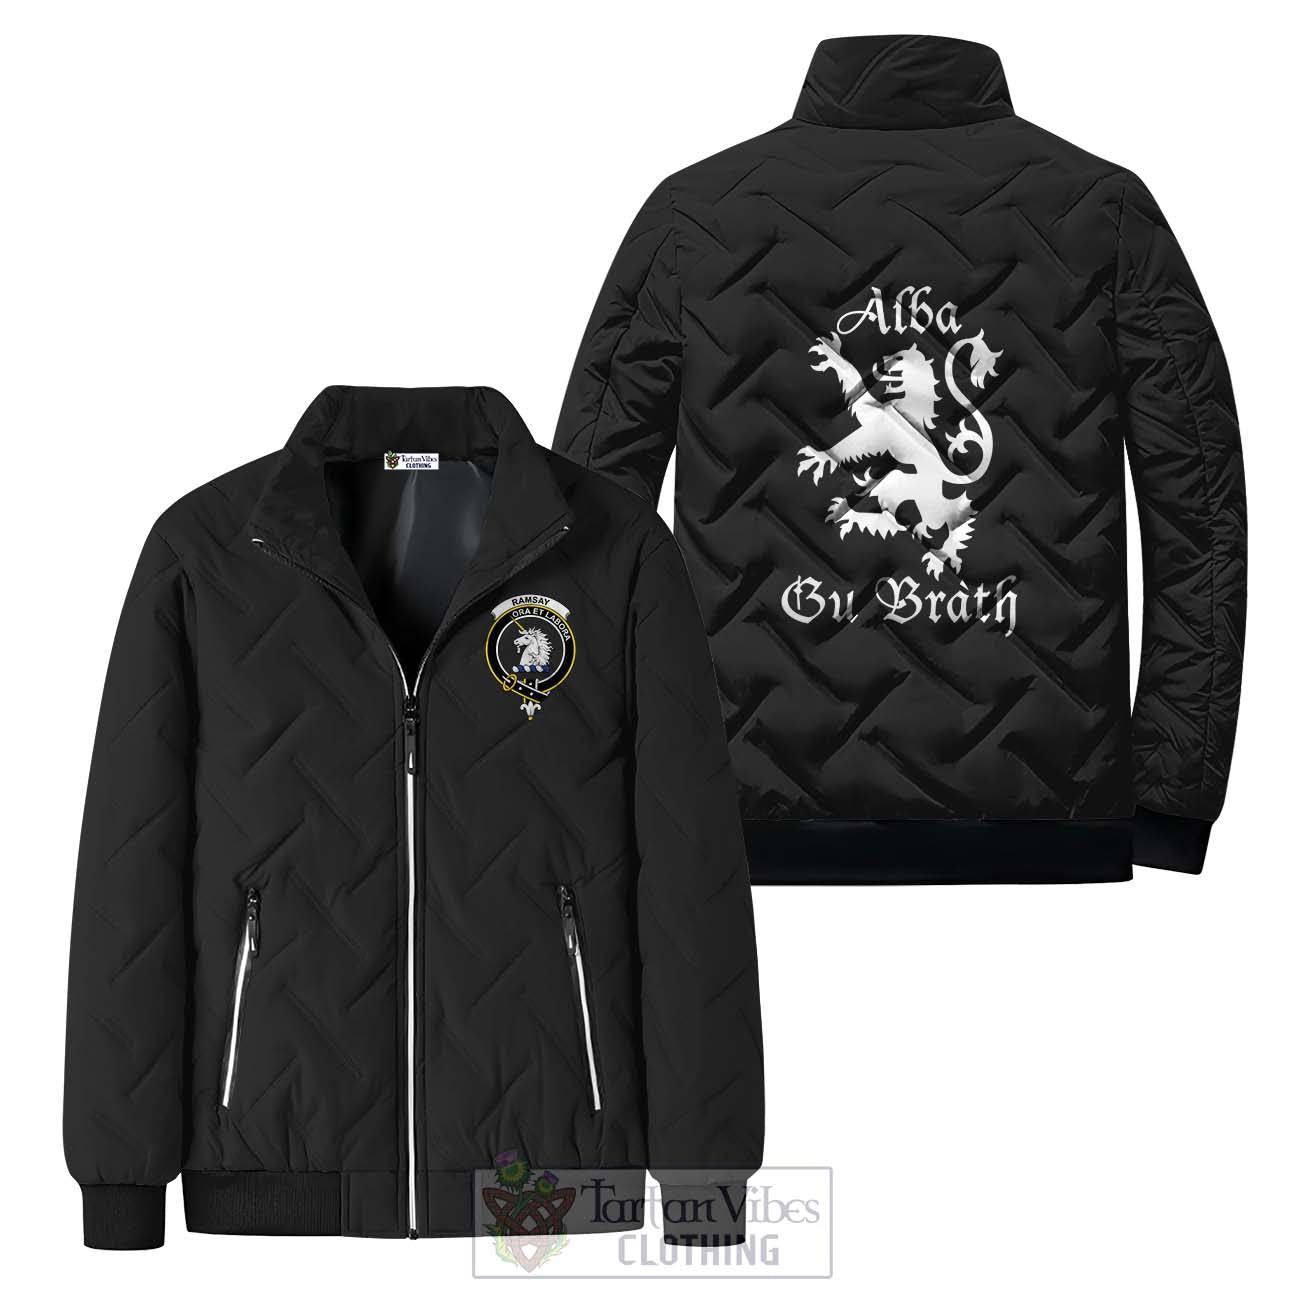 Tartan Vibes Clothing Ramsay Family Crest Padded Cotton Jacket Lion Rampant Alba Gu Brath Style